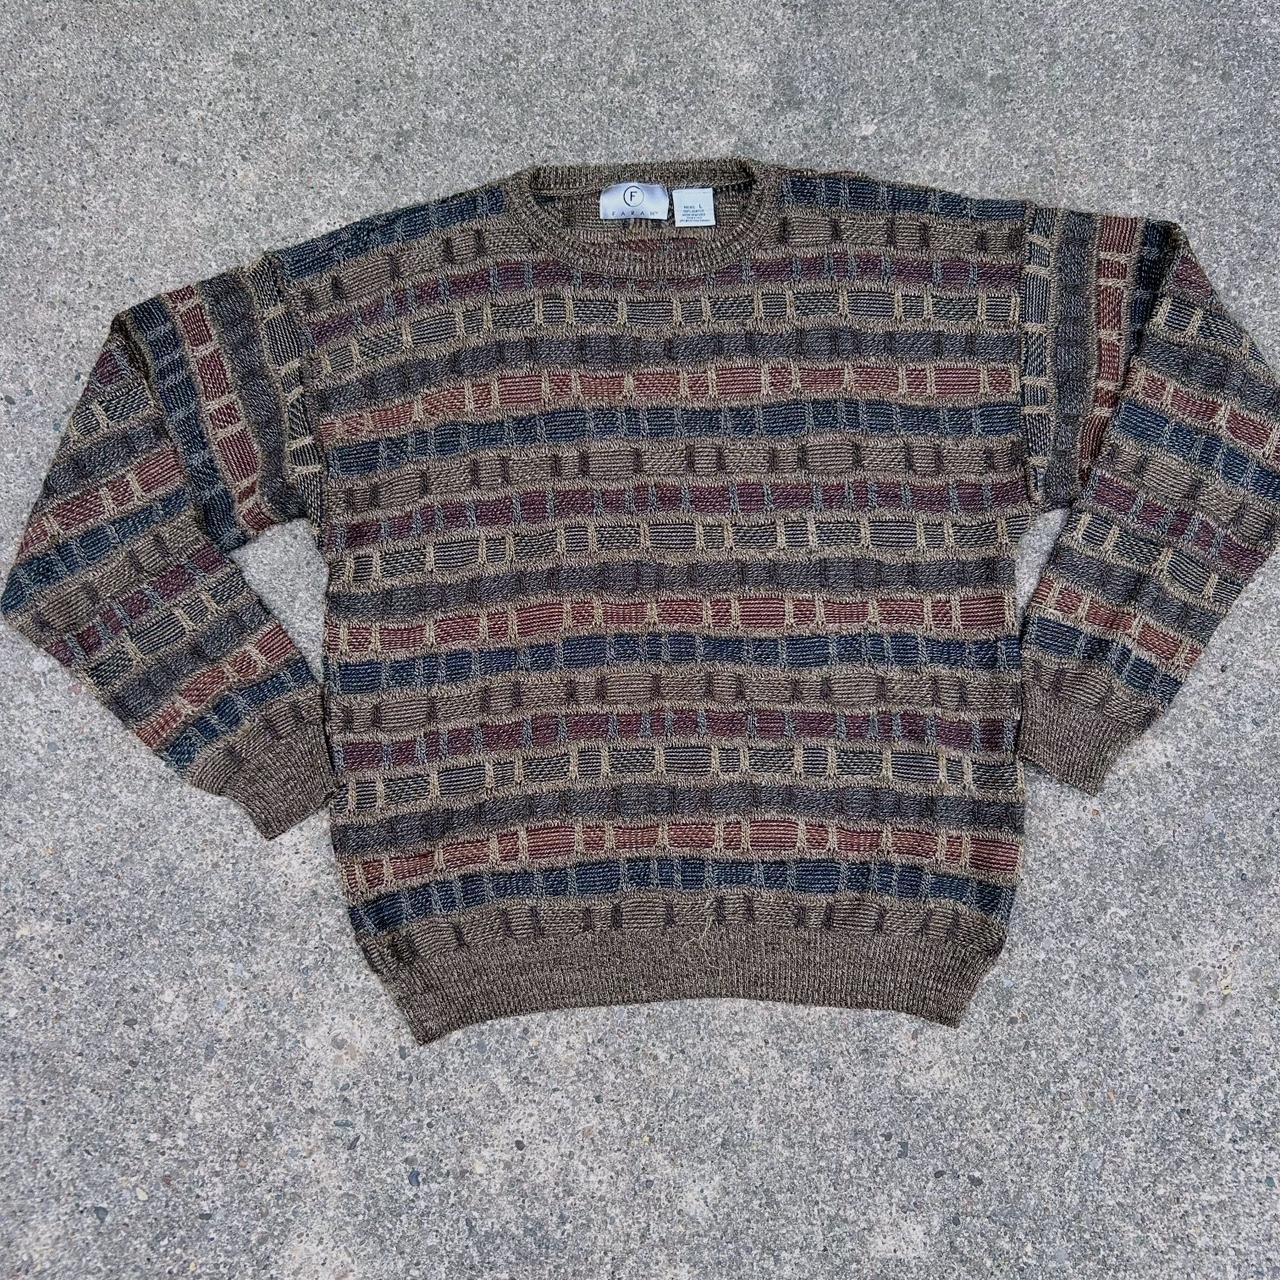 Men’s large Farah Sweater #menssweater #sweater #farah - Depop